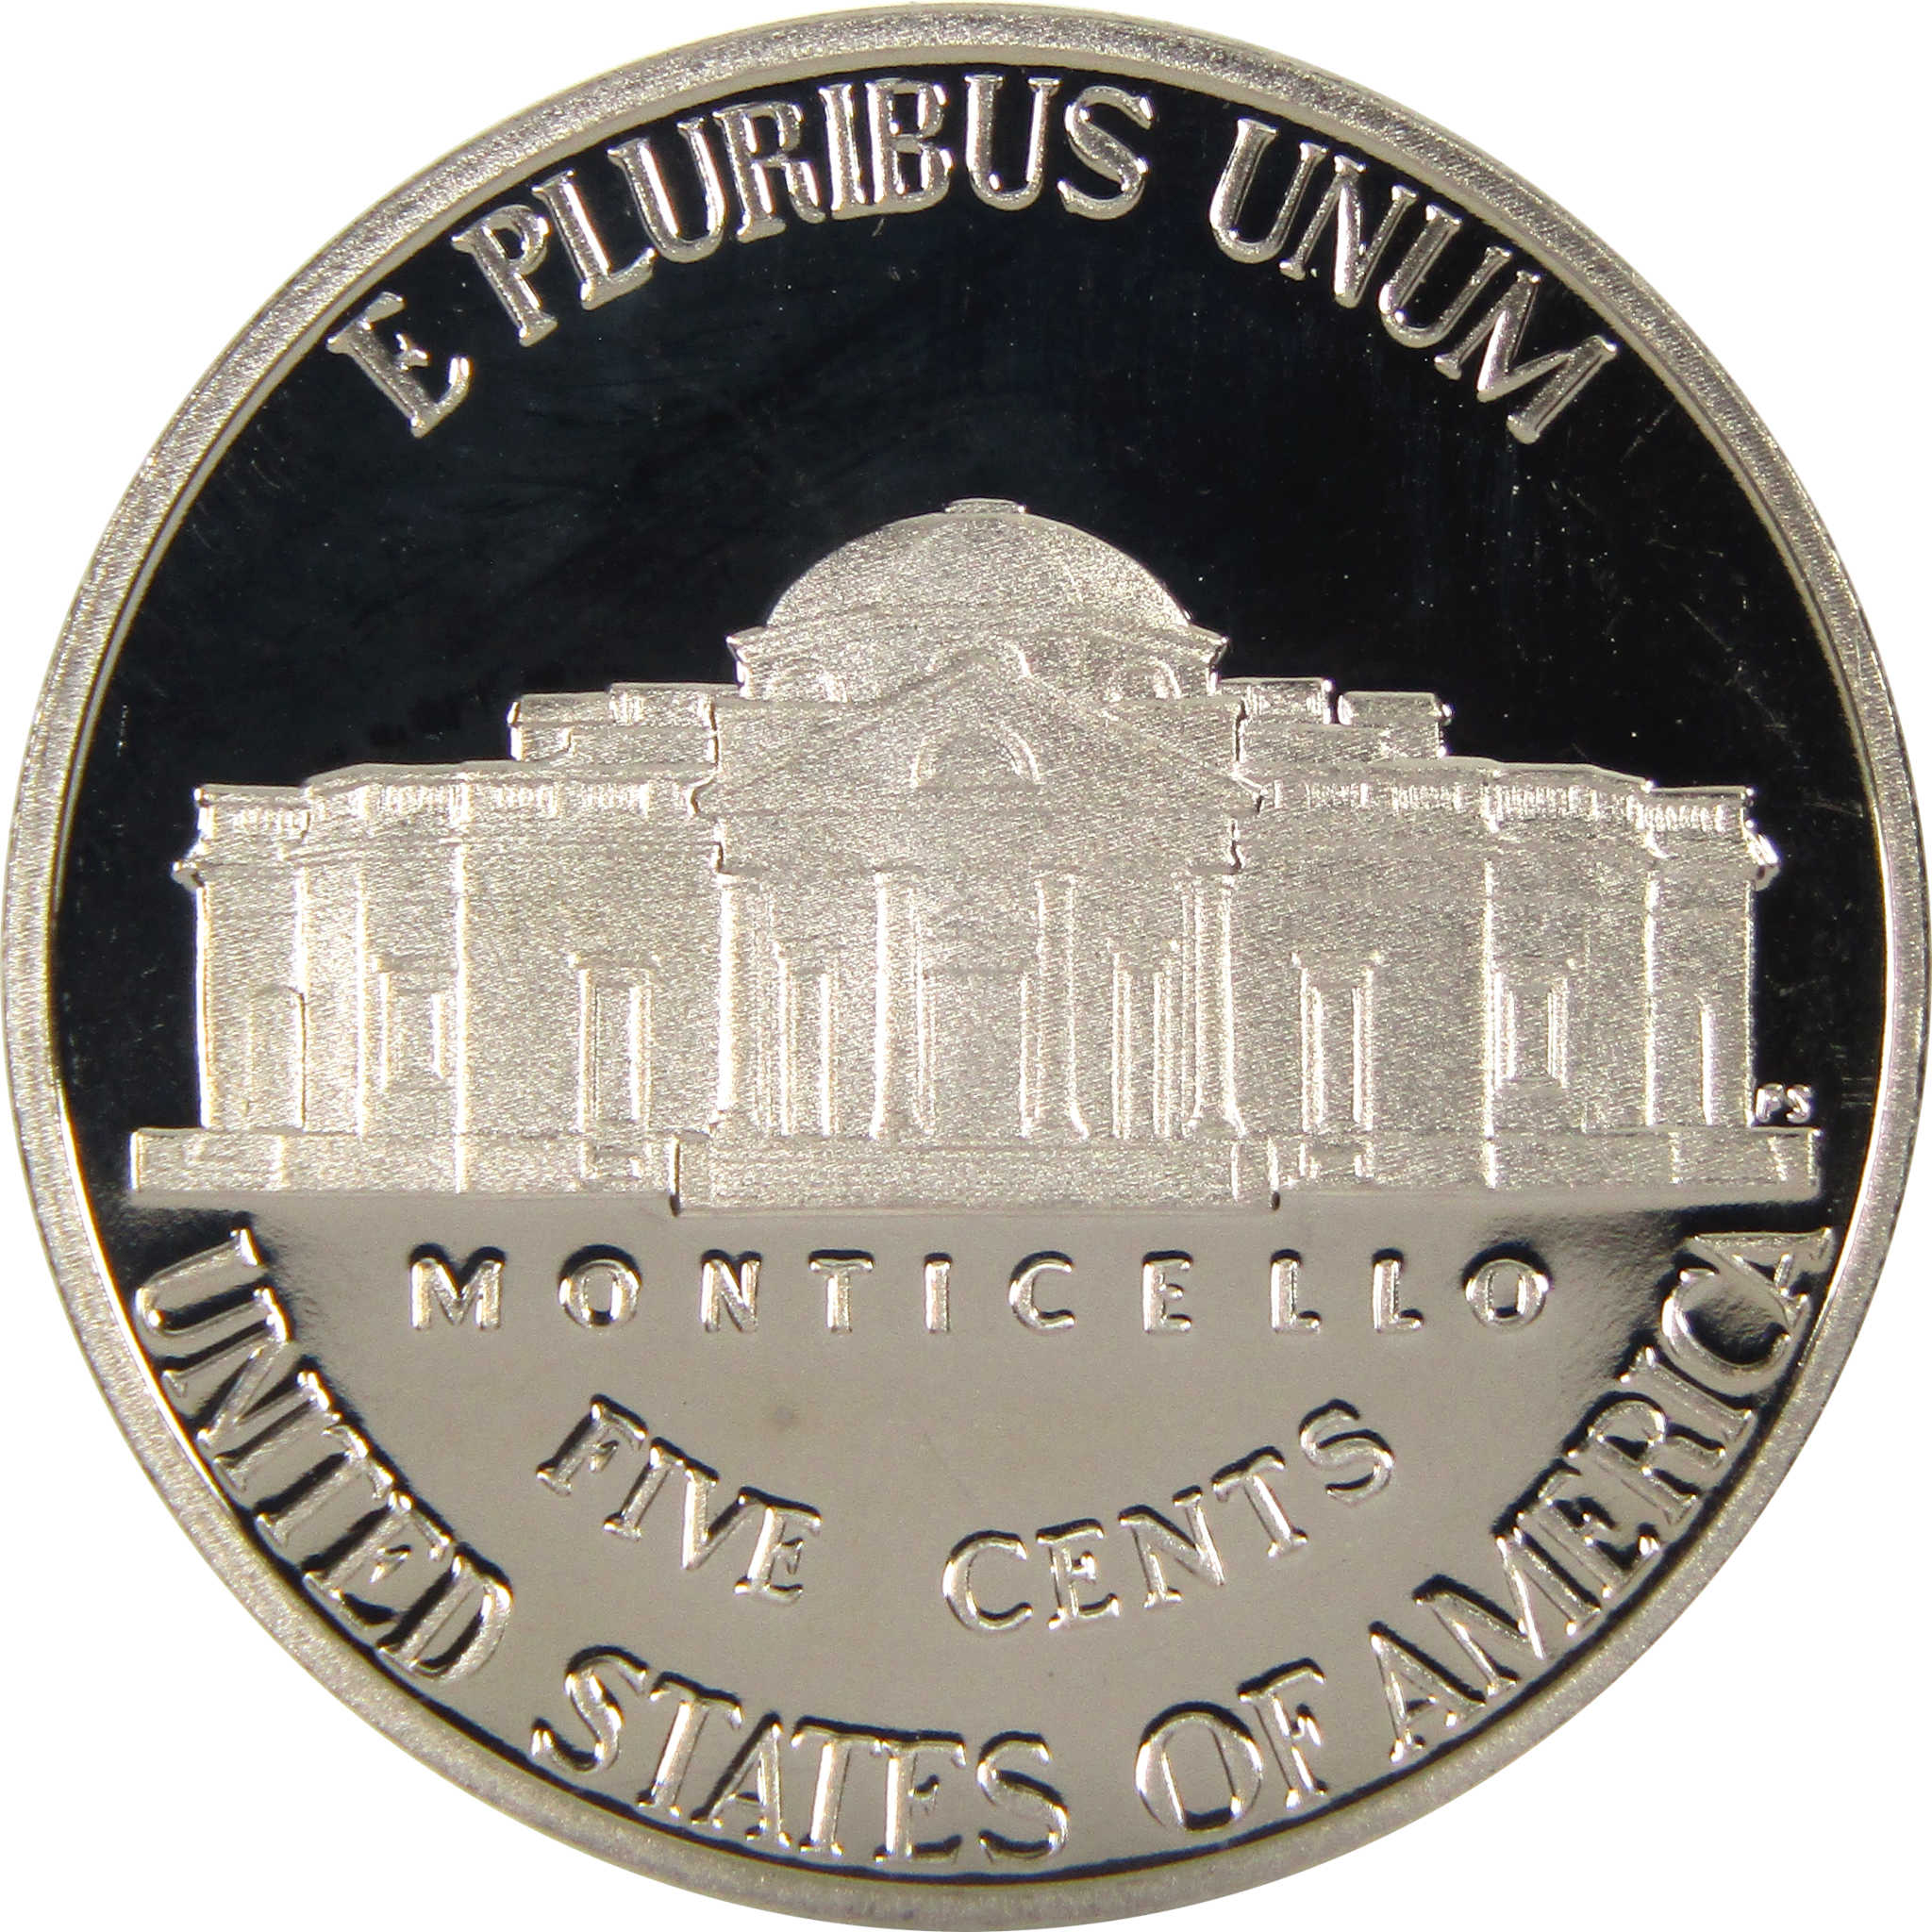 2021 S Jefferson Nickel 5c Proof Coin